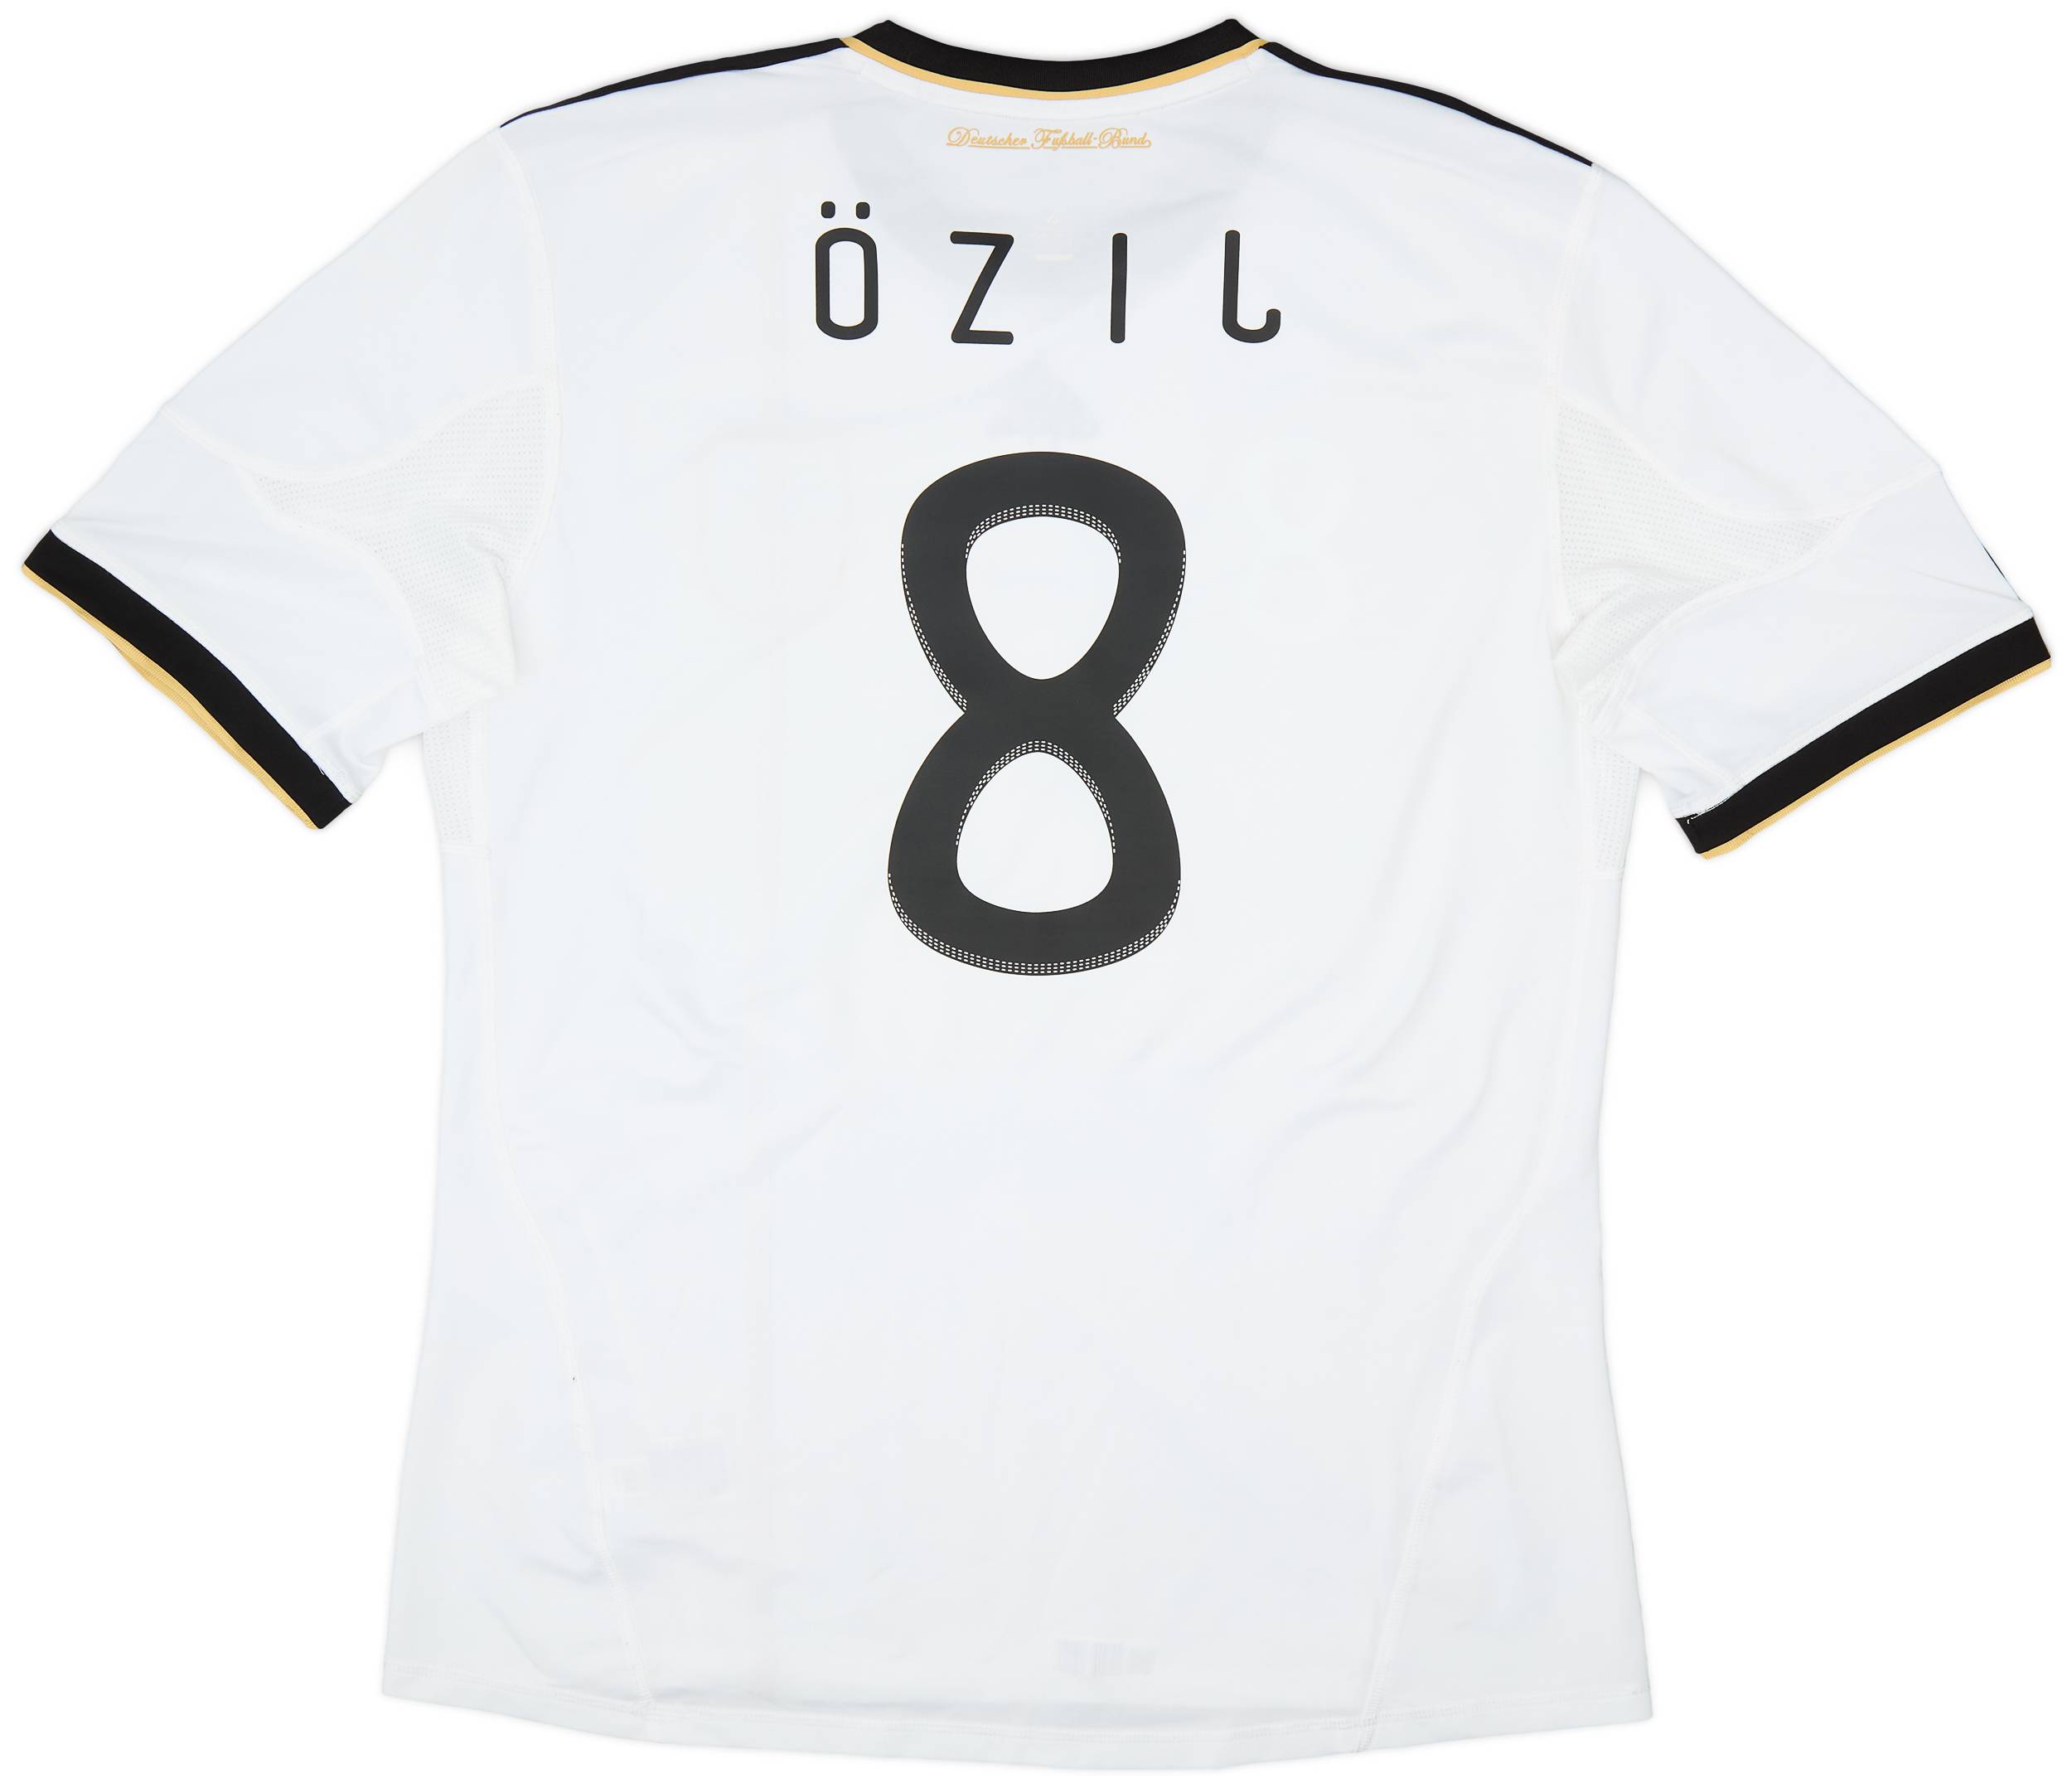 2010-11 Germany Home Shirt Ozil #8 - 9/10 - (XL)